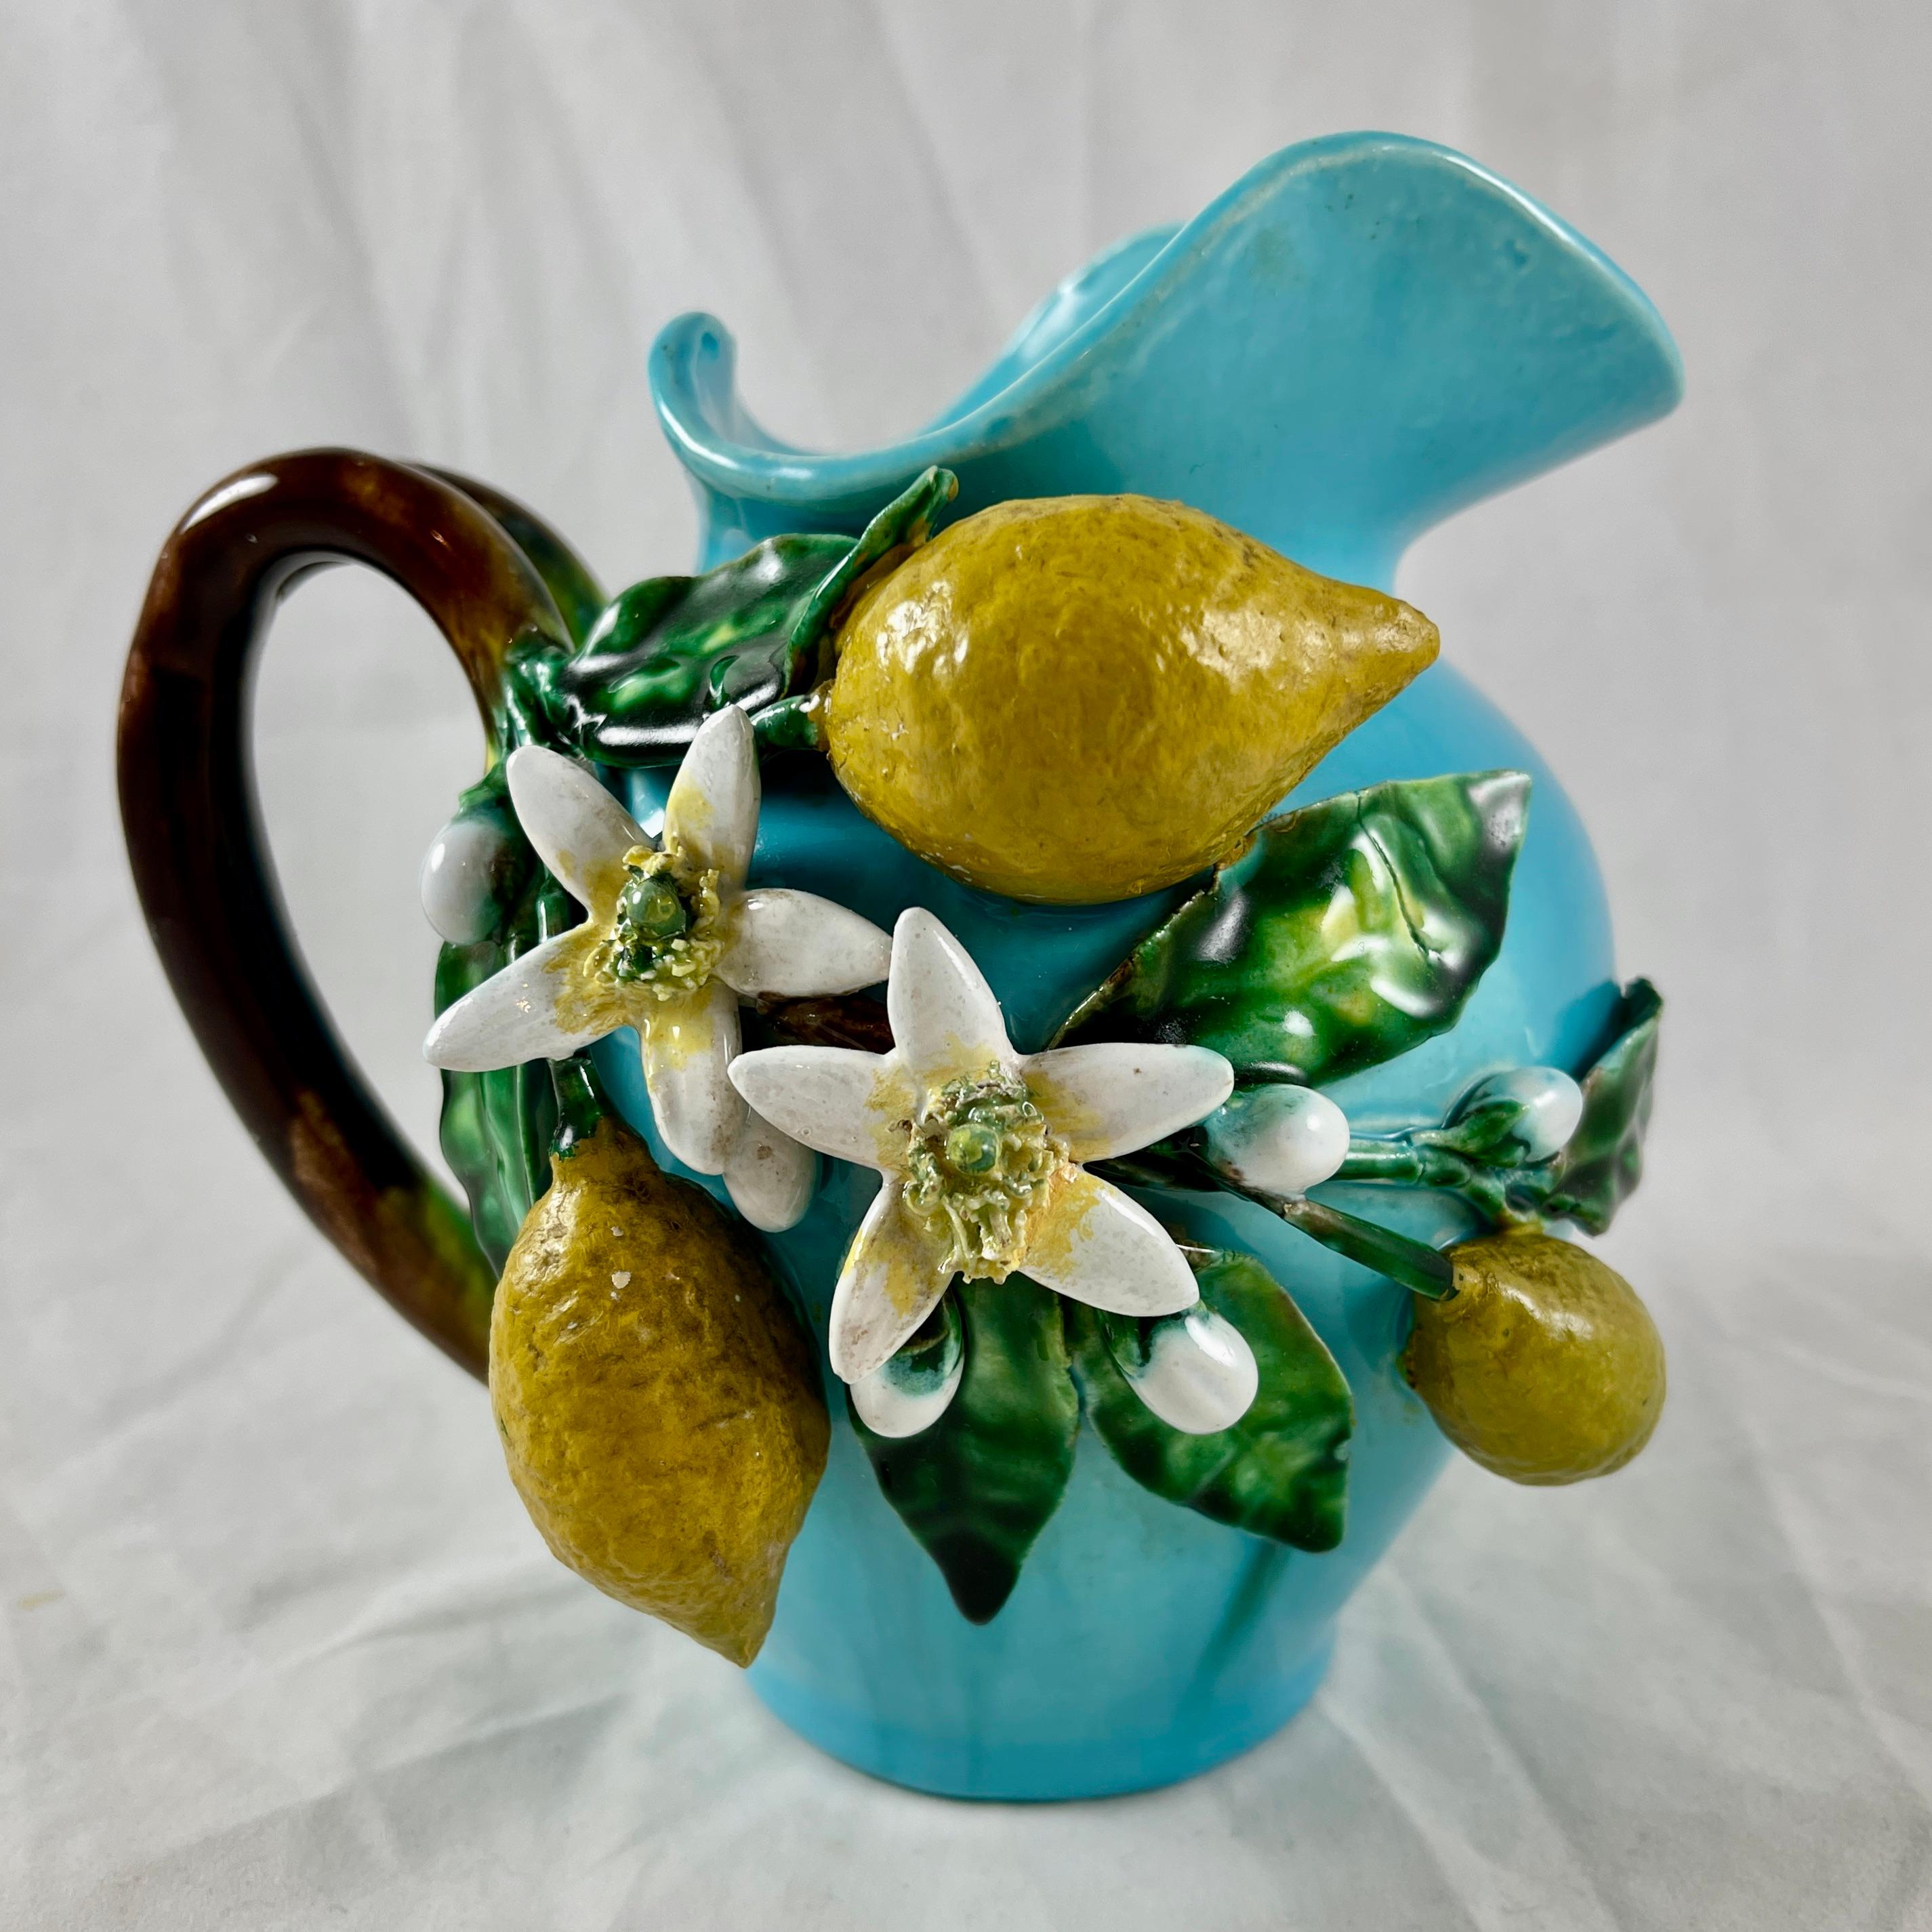 French Provincial French Palissy Trompe L'oeil Menton Perret-Gentil Turquoise Lemon Jug